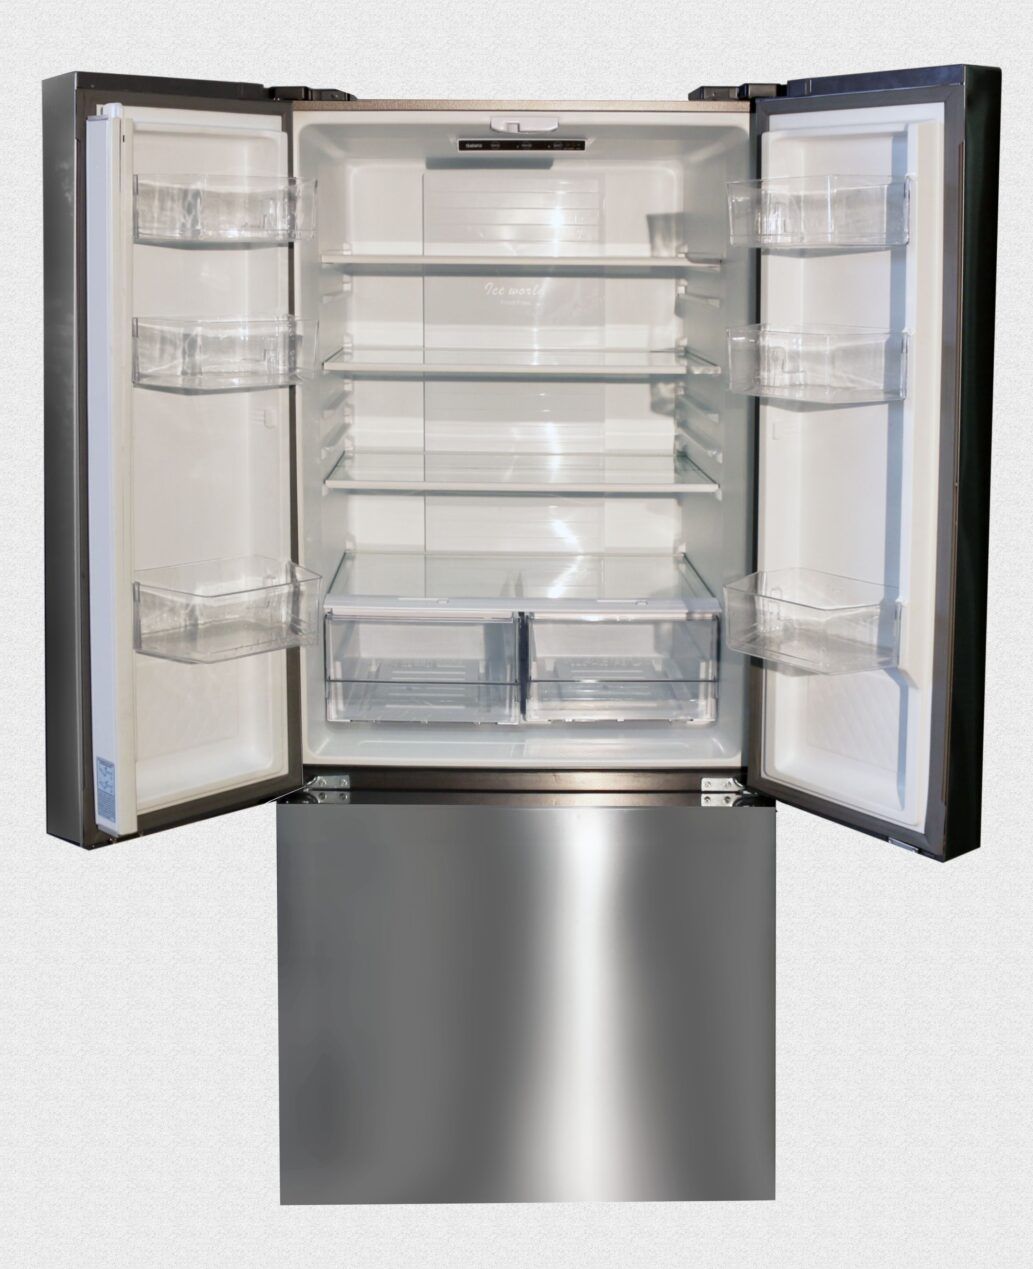 exclusive-12-volt-fridge-expands-way-interglobal-s-rv-kitchen-line